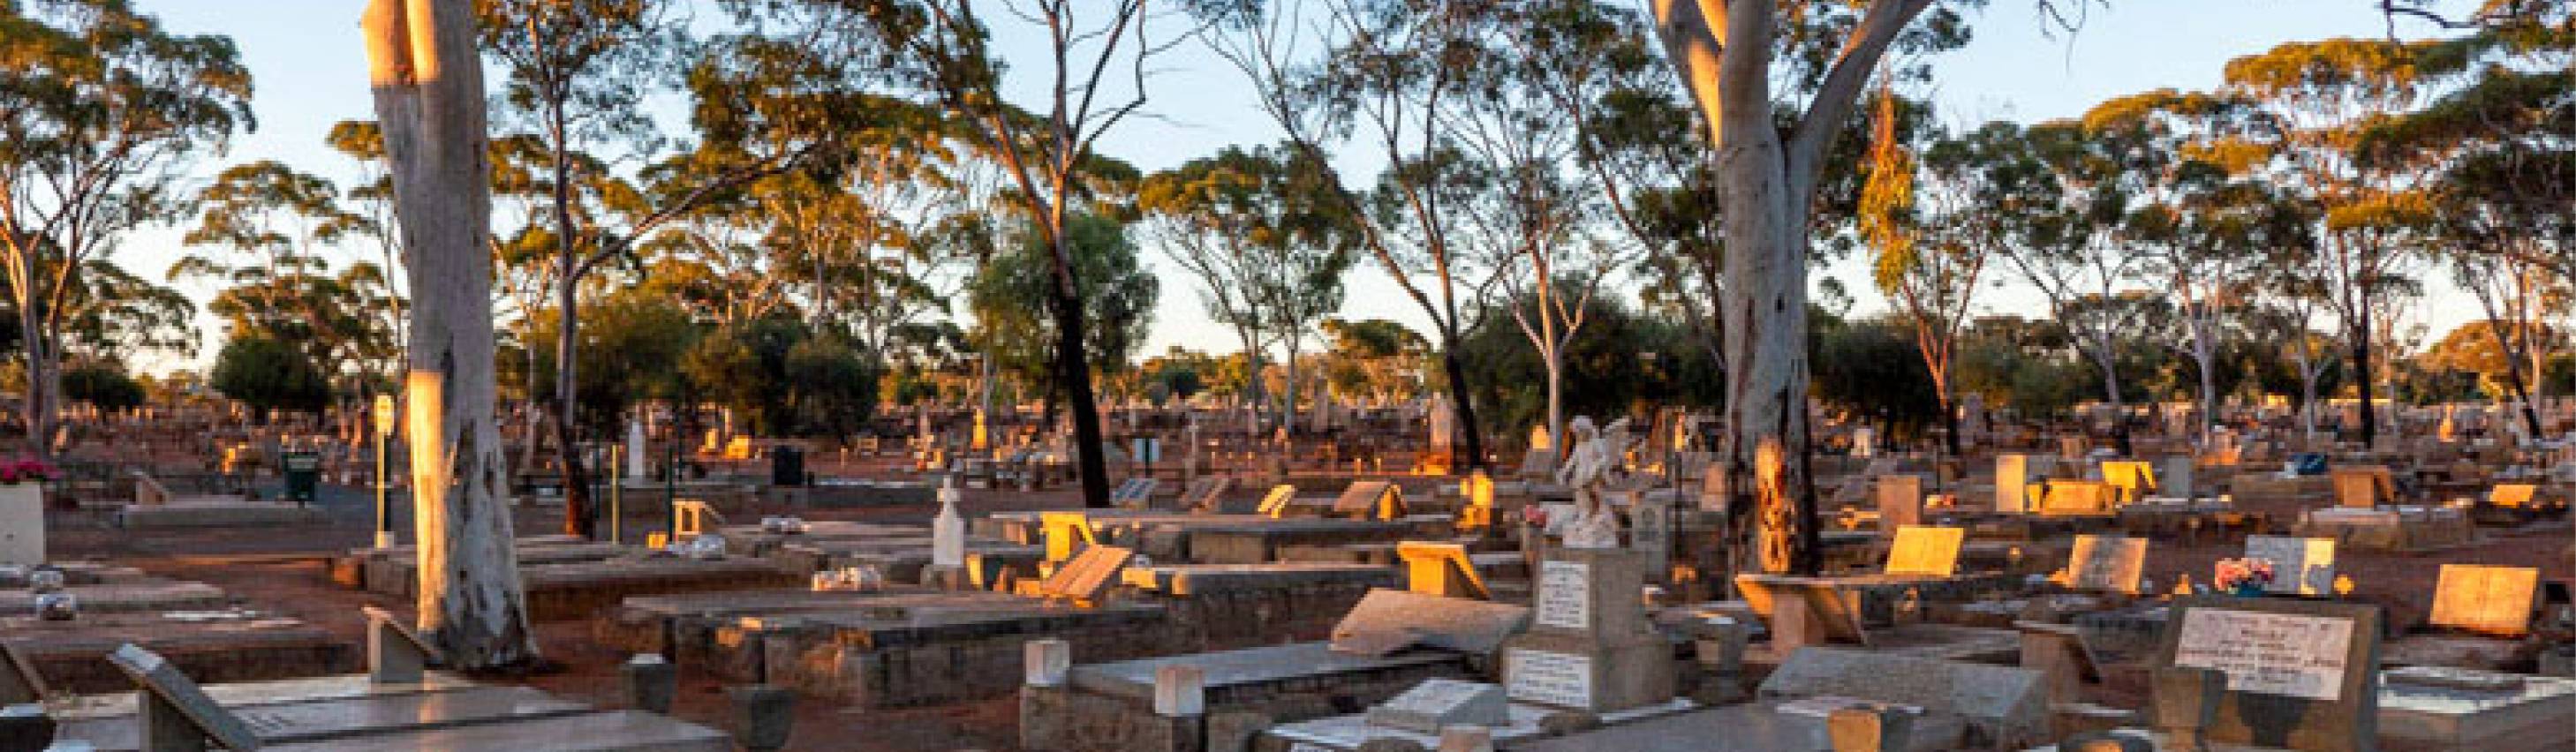 Kalgoorlie Cemetery Board | Information